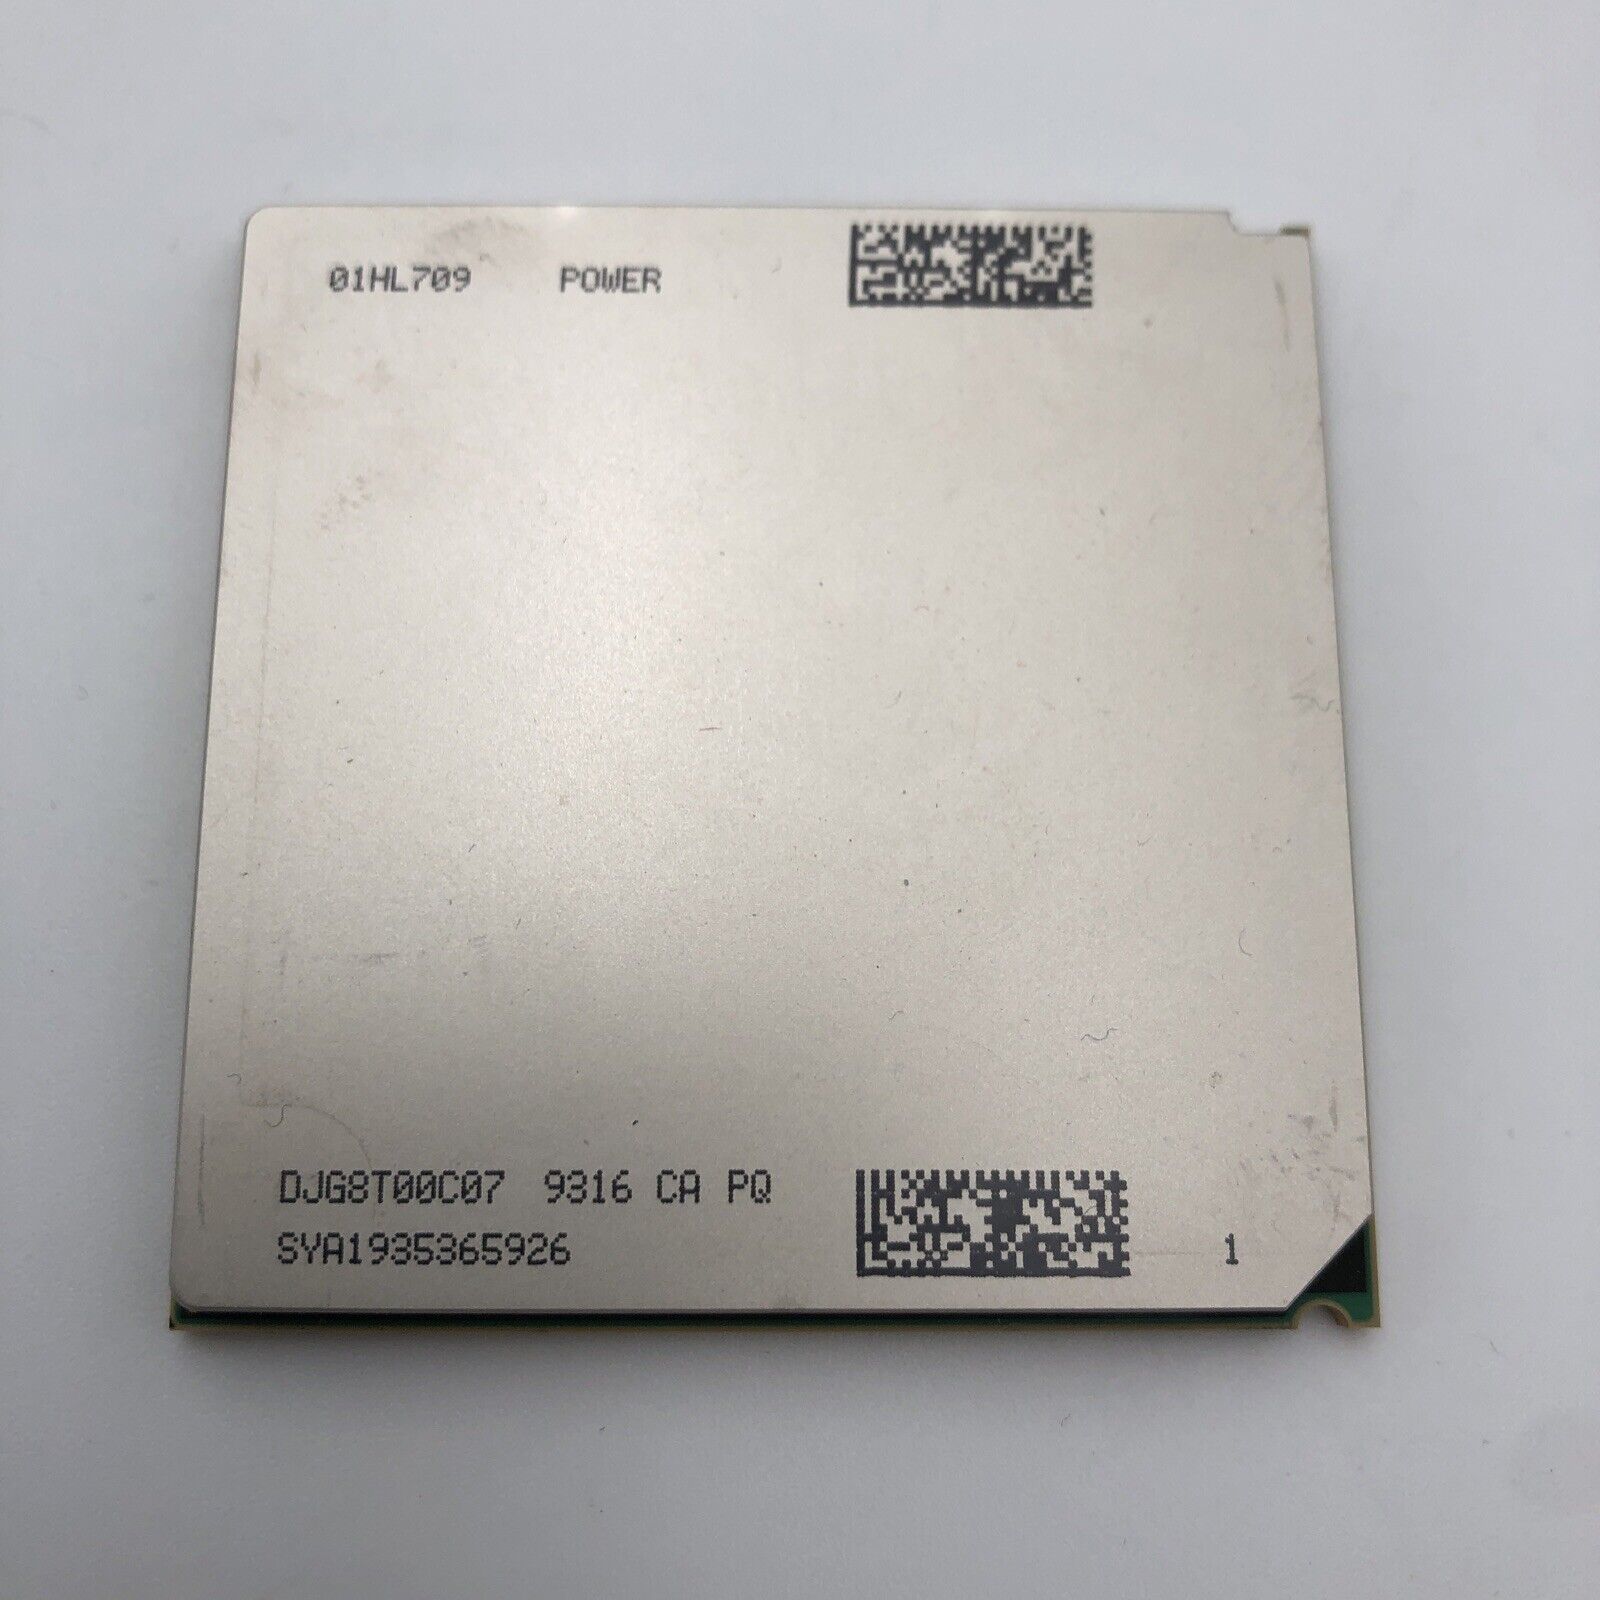 IBM Power7 CPU Processor Module 01HL709